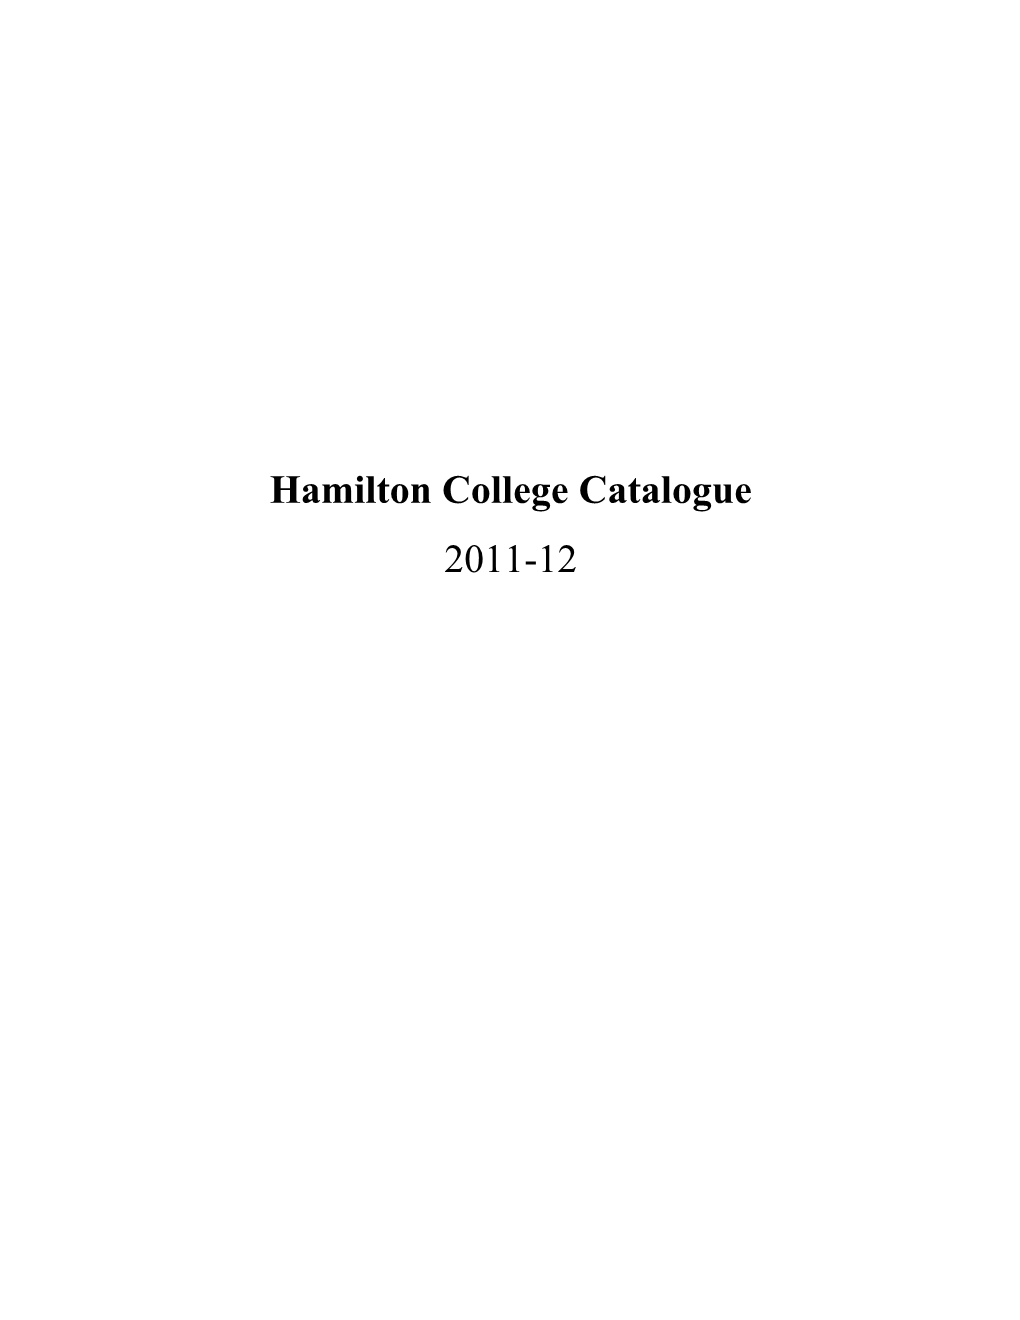 Hamilton College Catalogue 2011-12